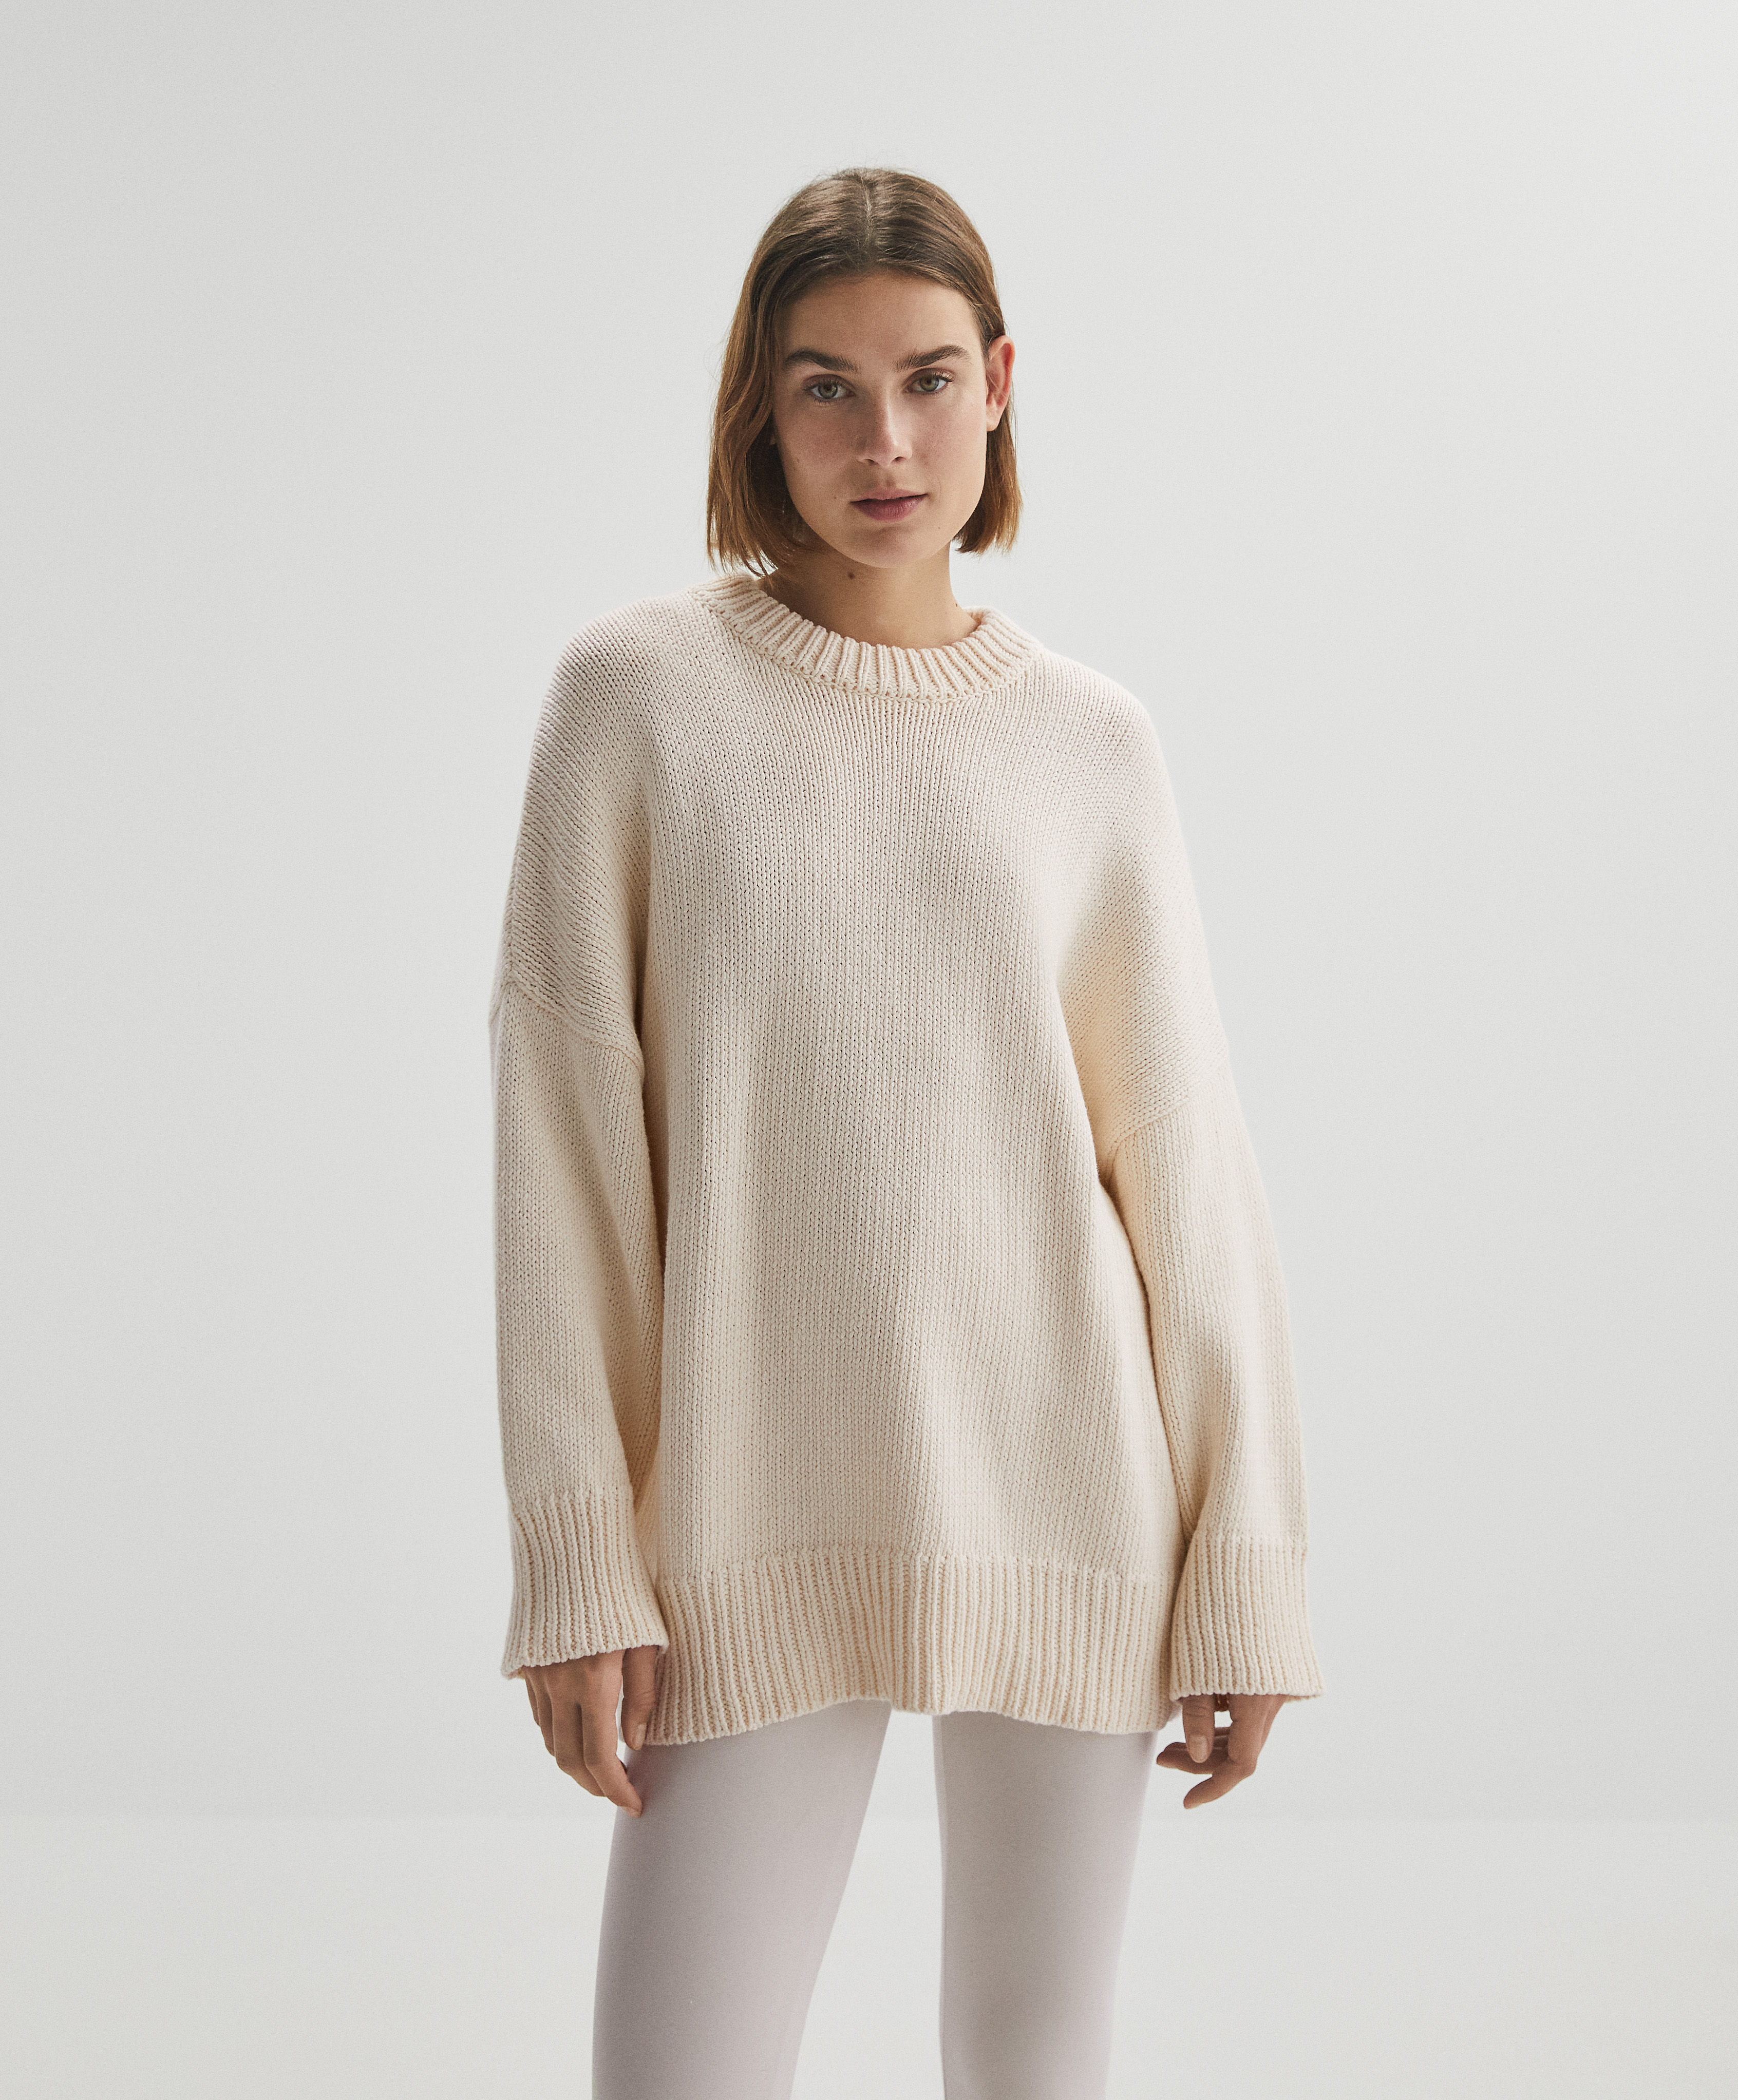 Oversize 100% cotton knit jumper